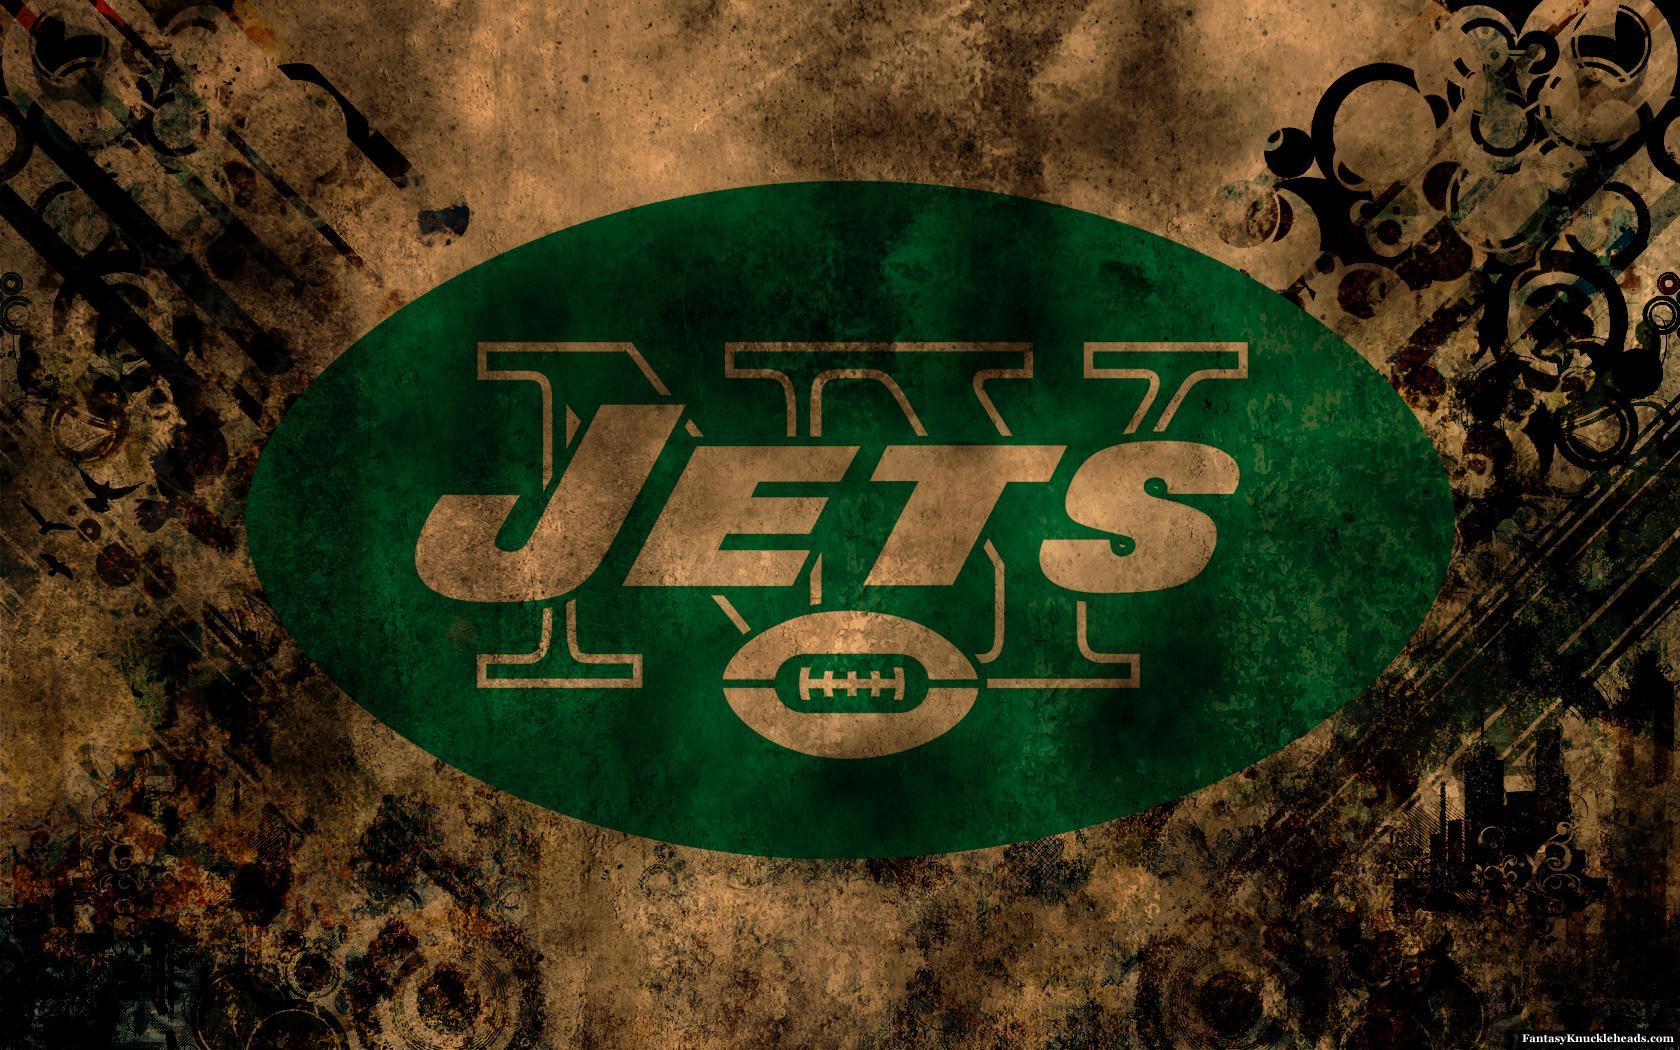 New York Jets Wallpaper. (41++ Wallpaper)